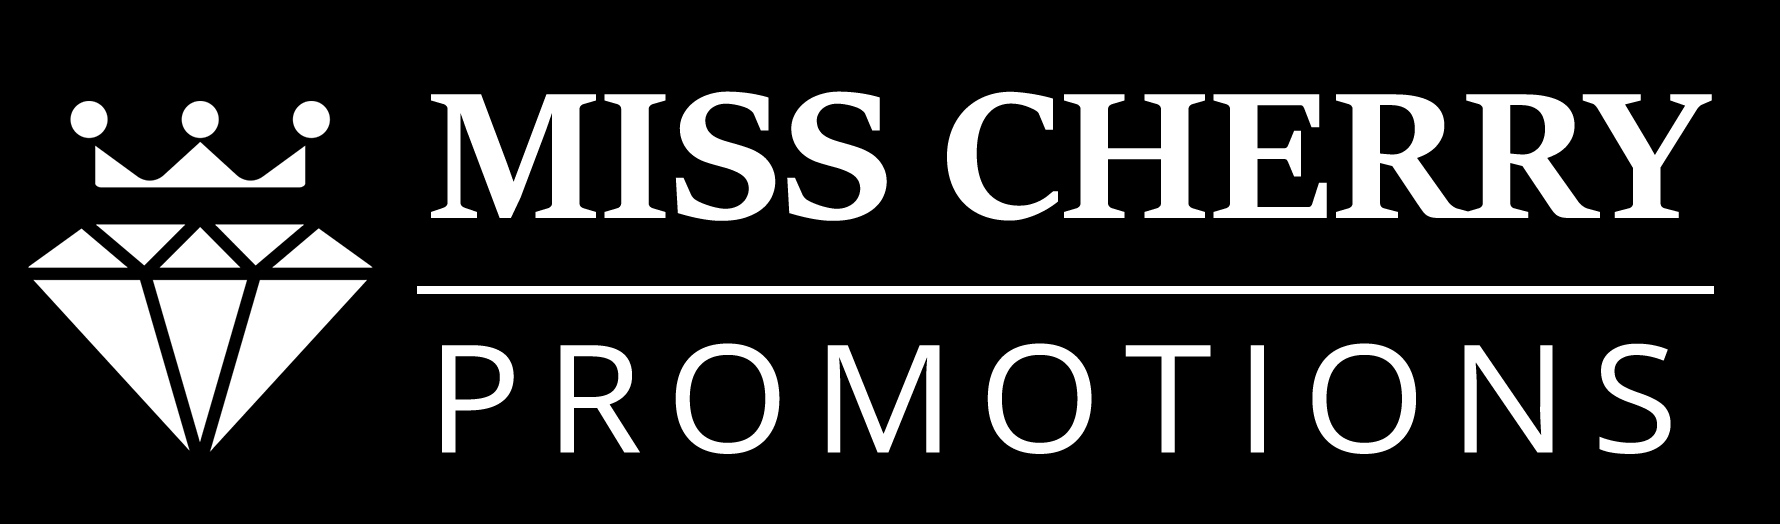 Miss Cherry Updated Logo Black BG